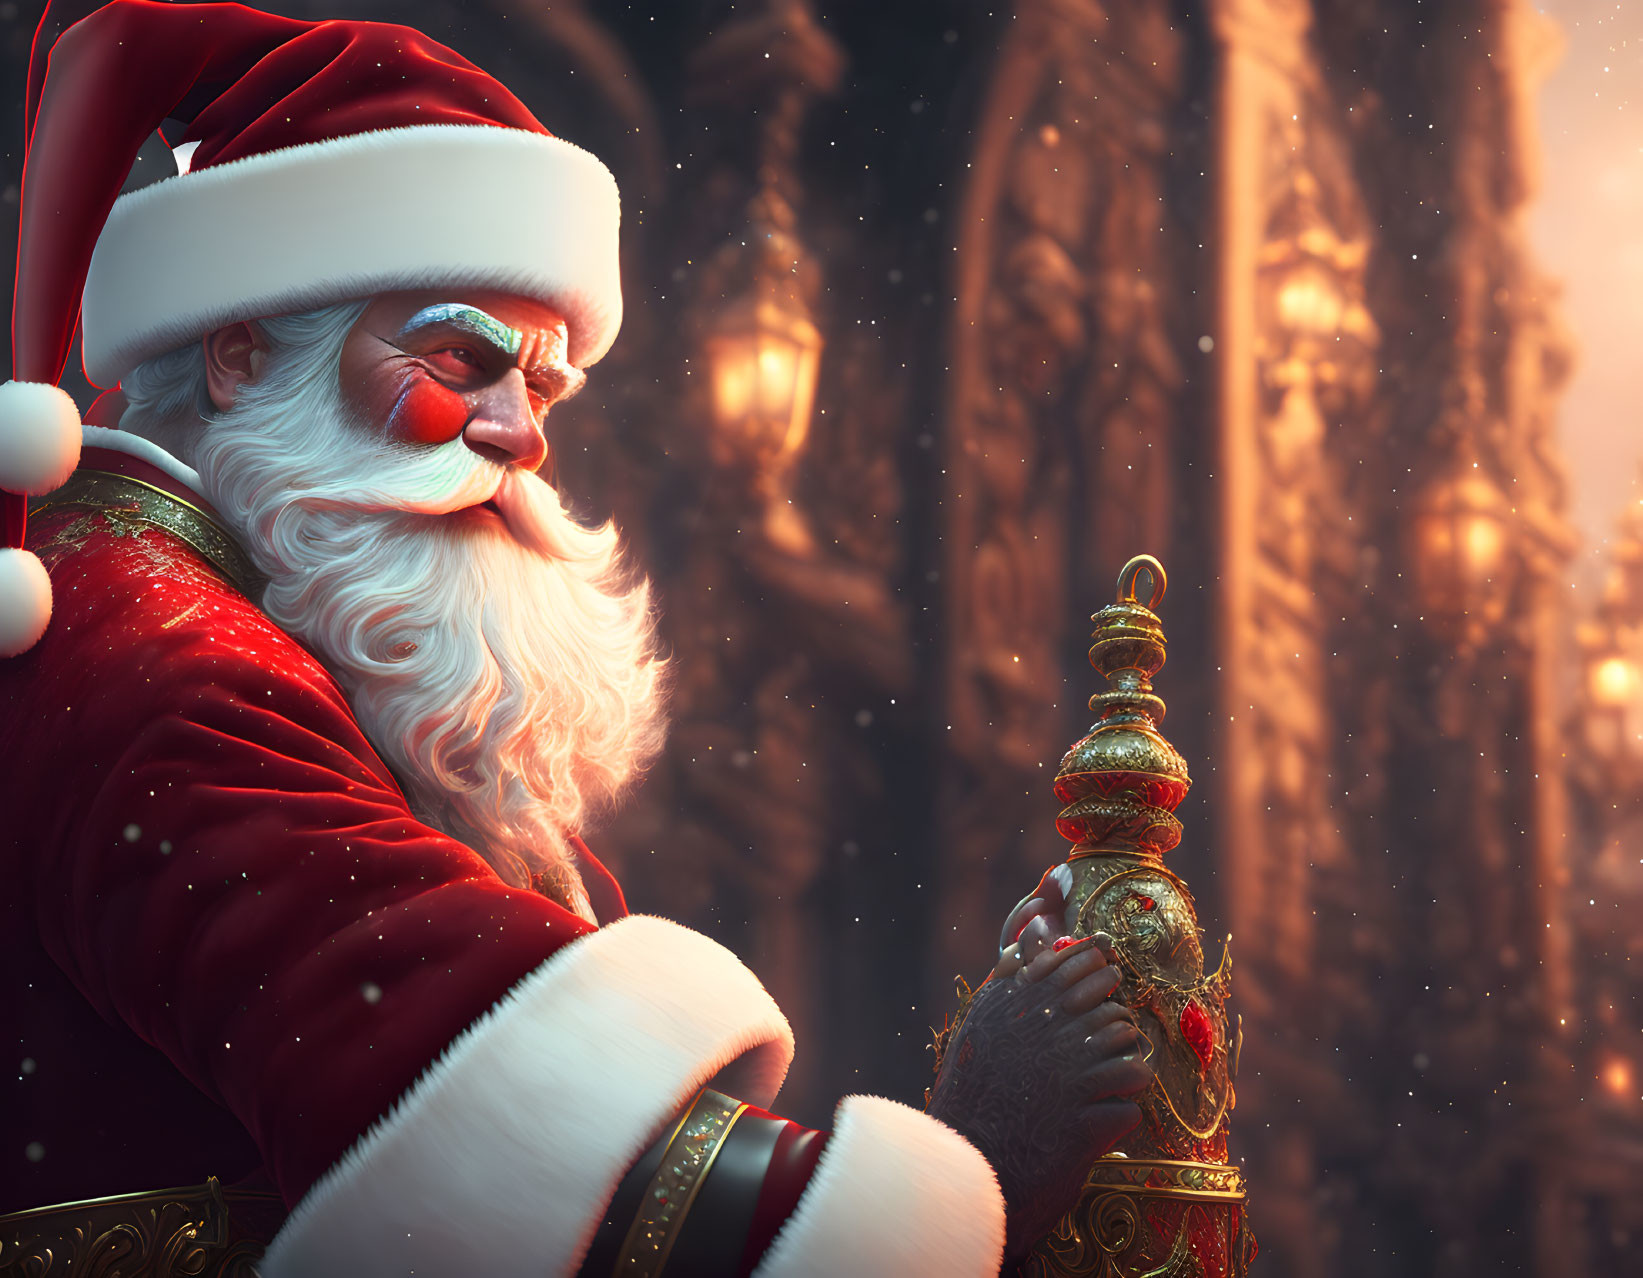 Evil Santa with a million fingers